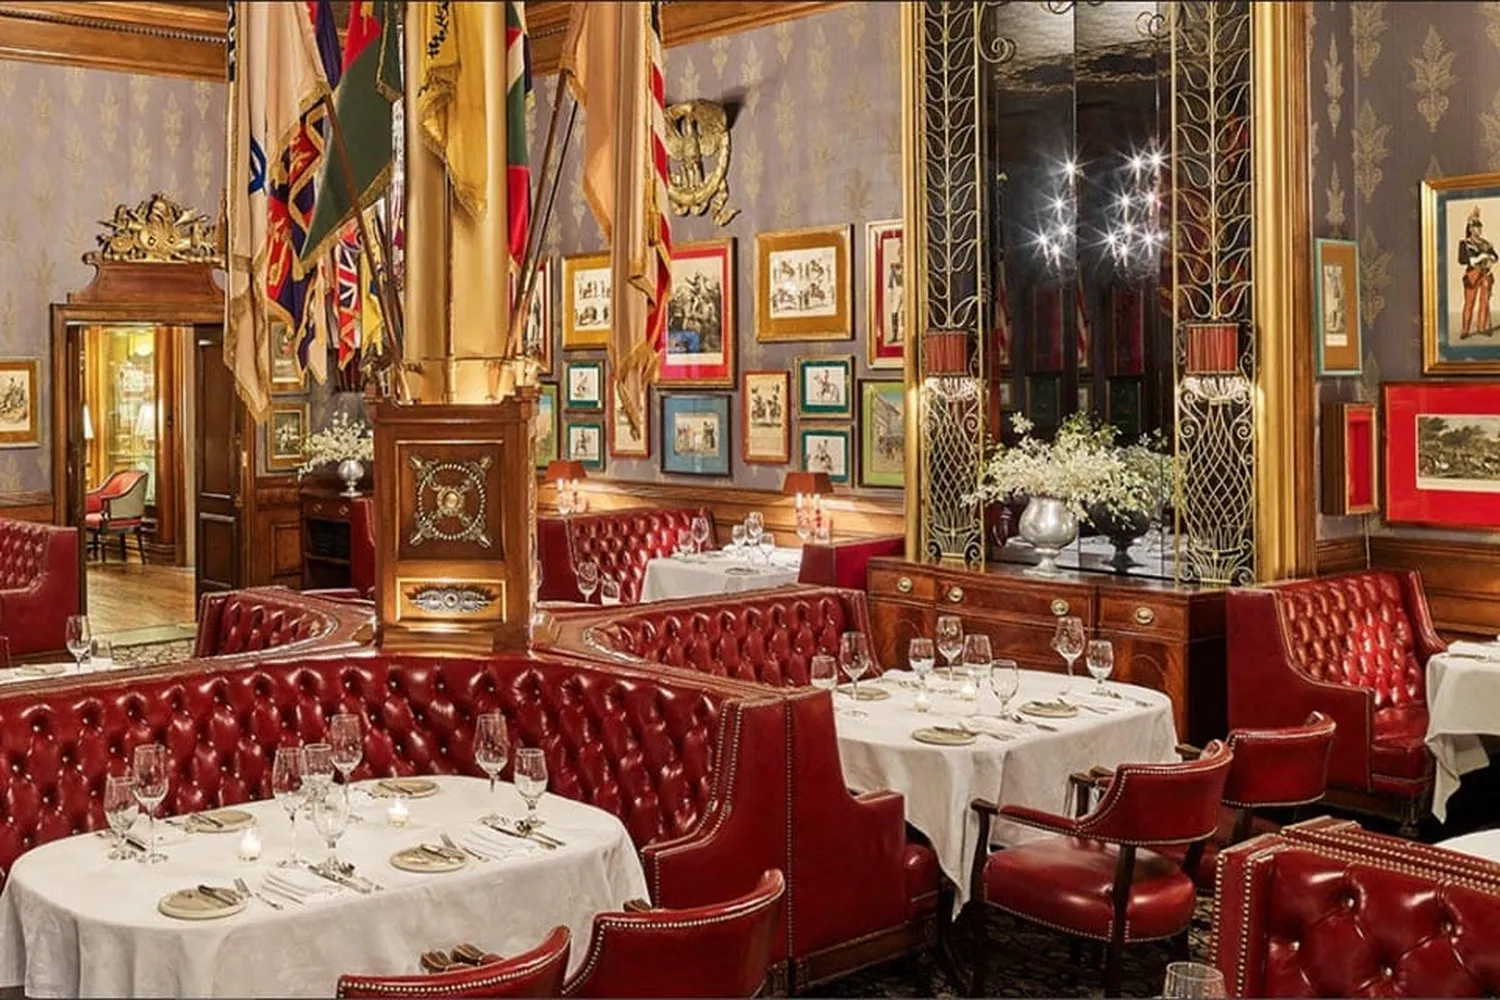 Palace arms Restaurant Denver